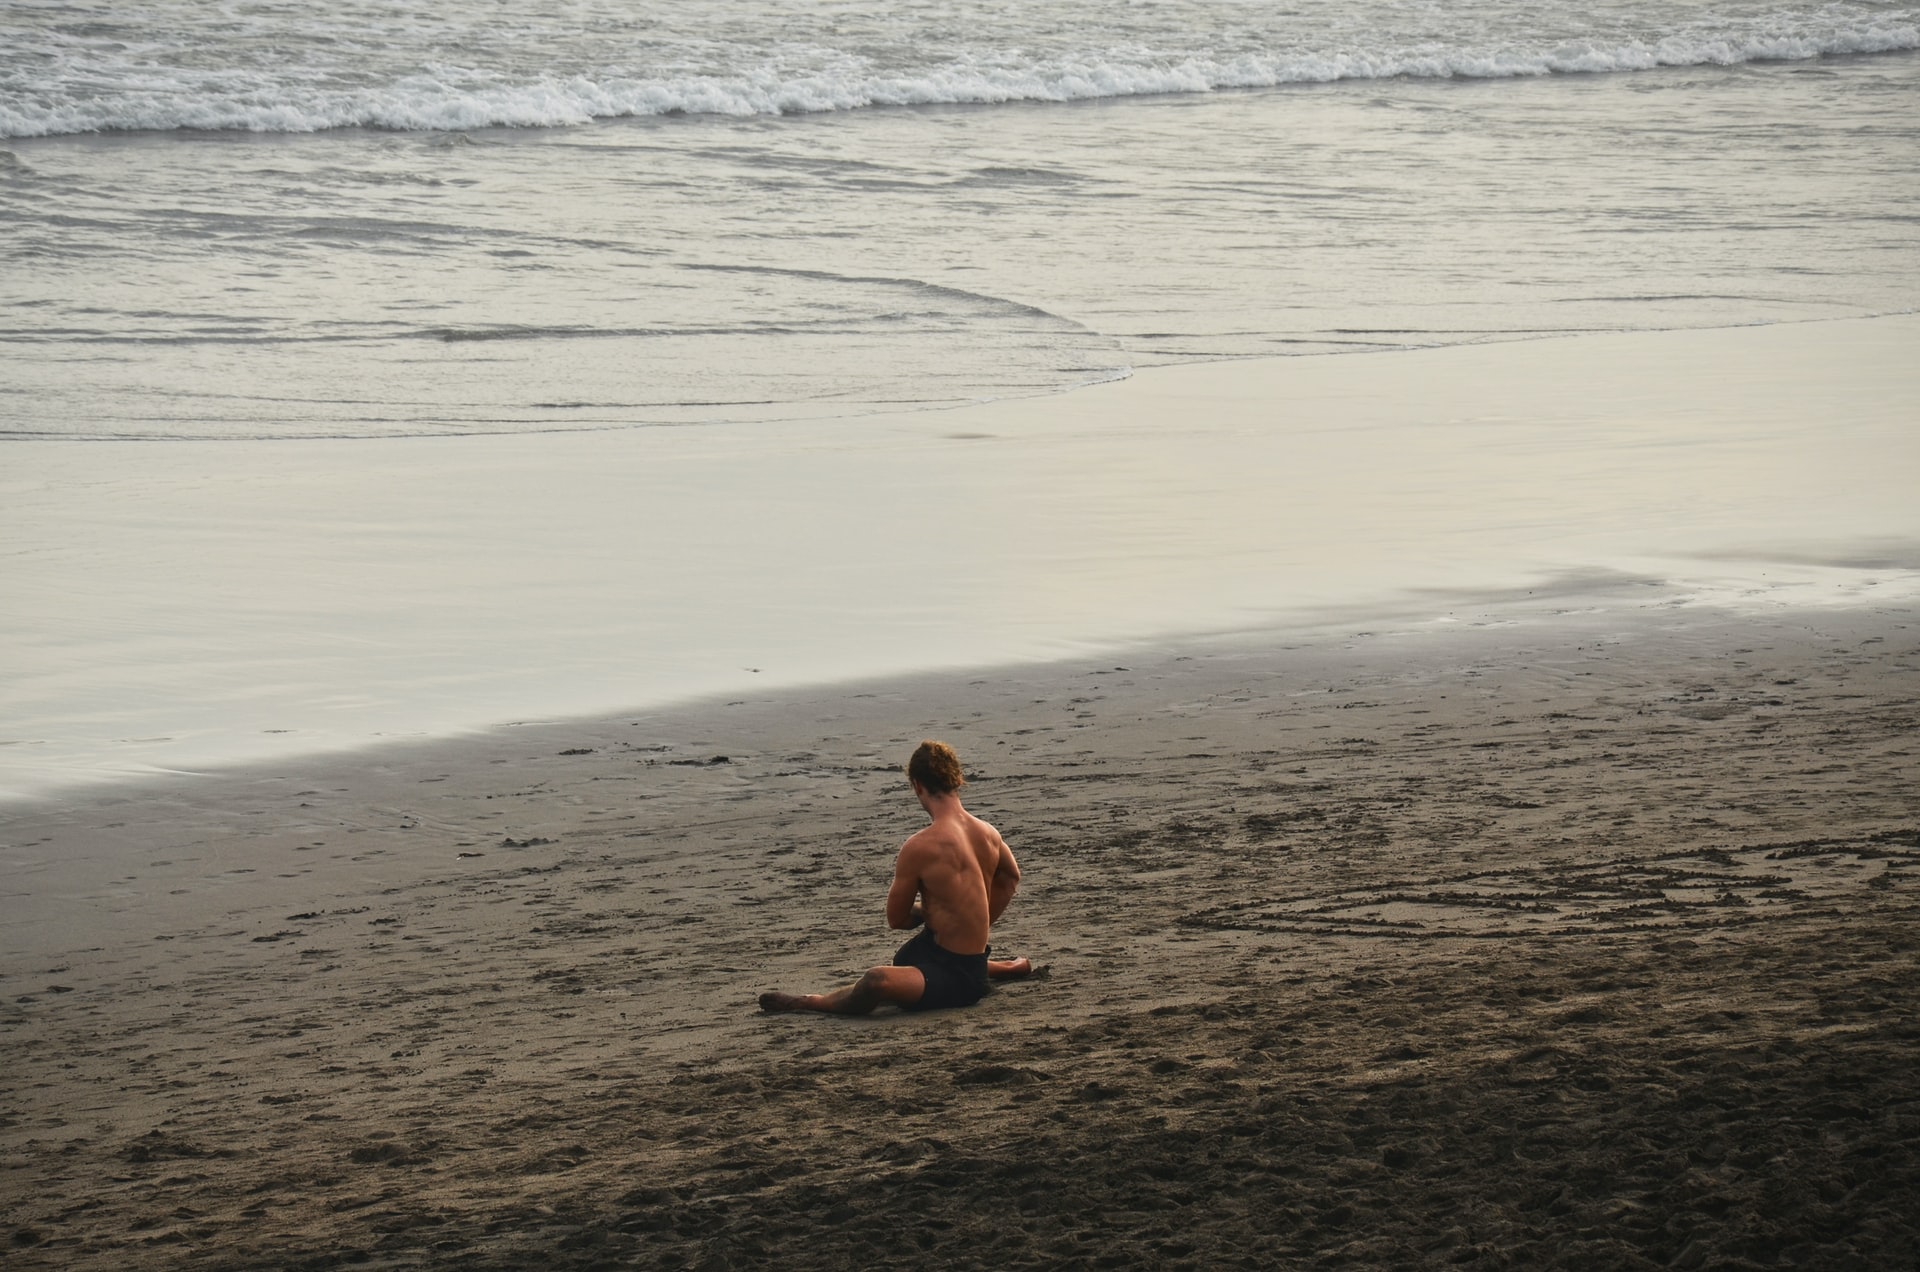 A man stretches on a beach in Bali. Photo: Unsplash